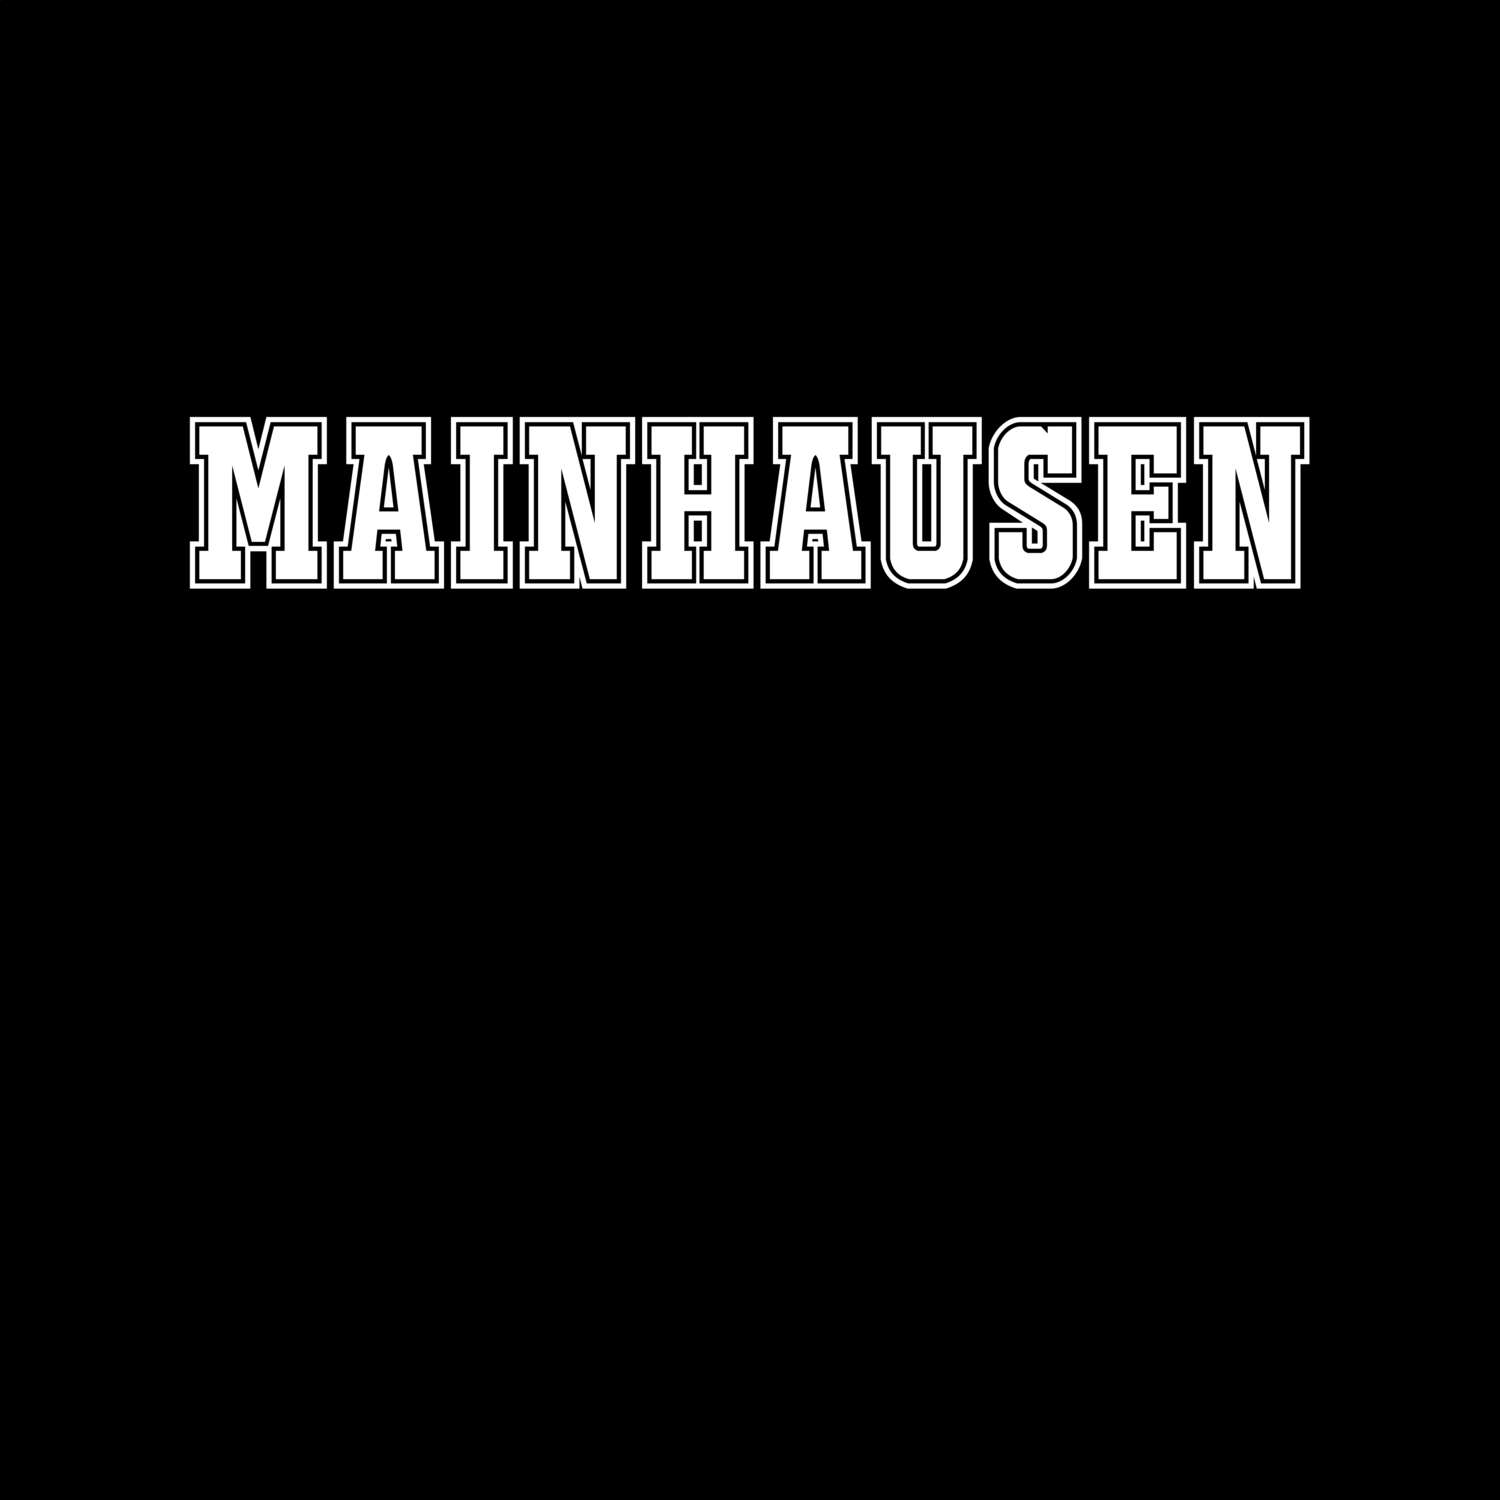 Mainhausen T-Shirt »Classic«